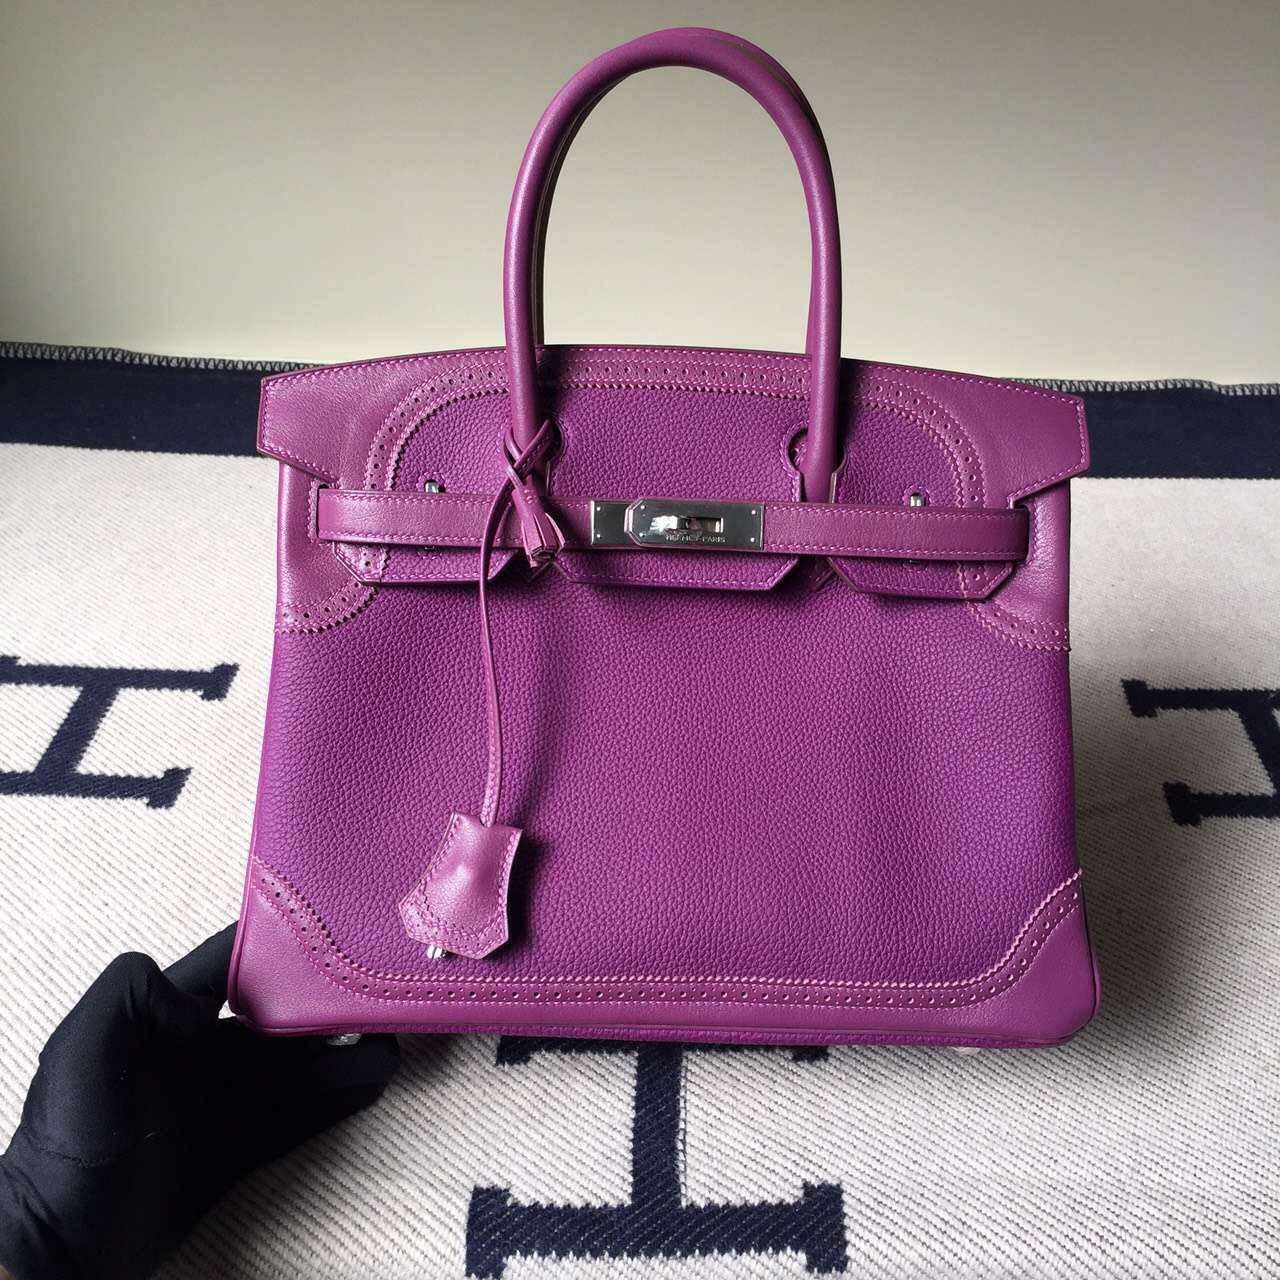 Wholesale Hermes Ghillies Birkin30cm in P9 Anemone Purple Togo Leather